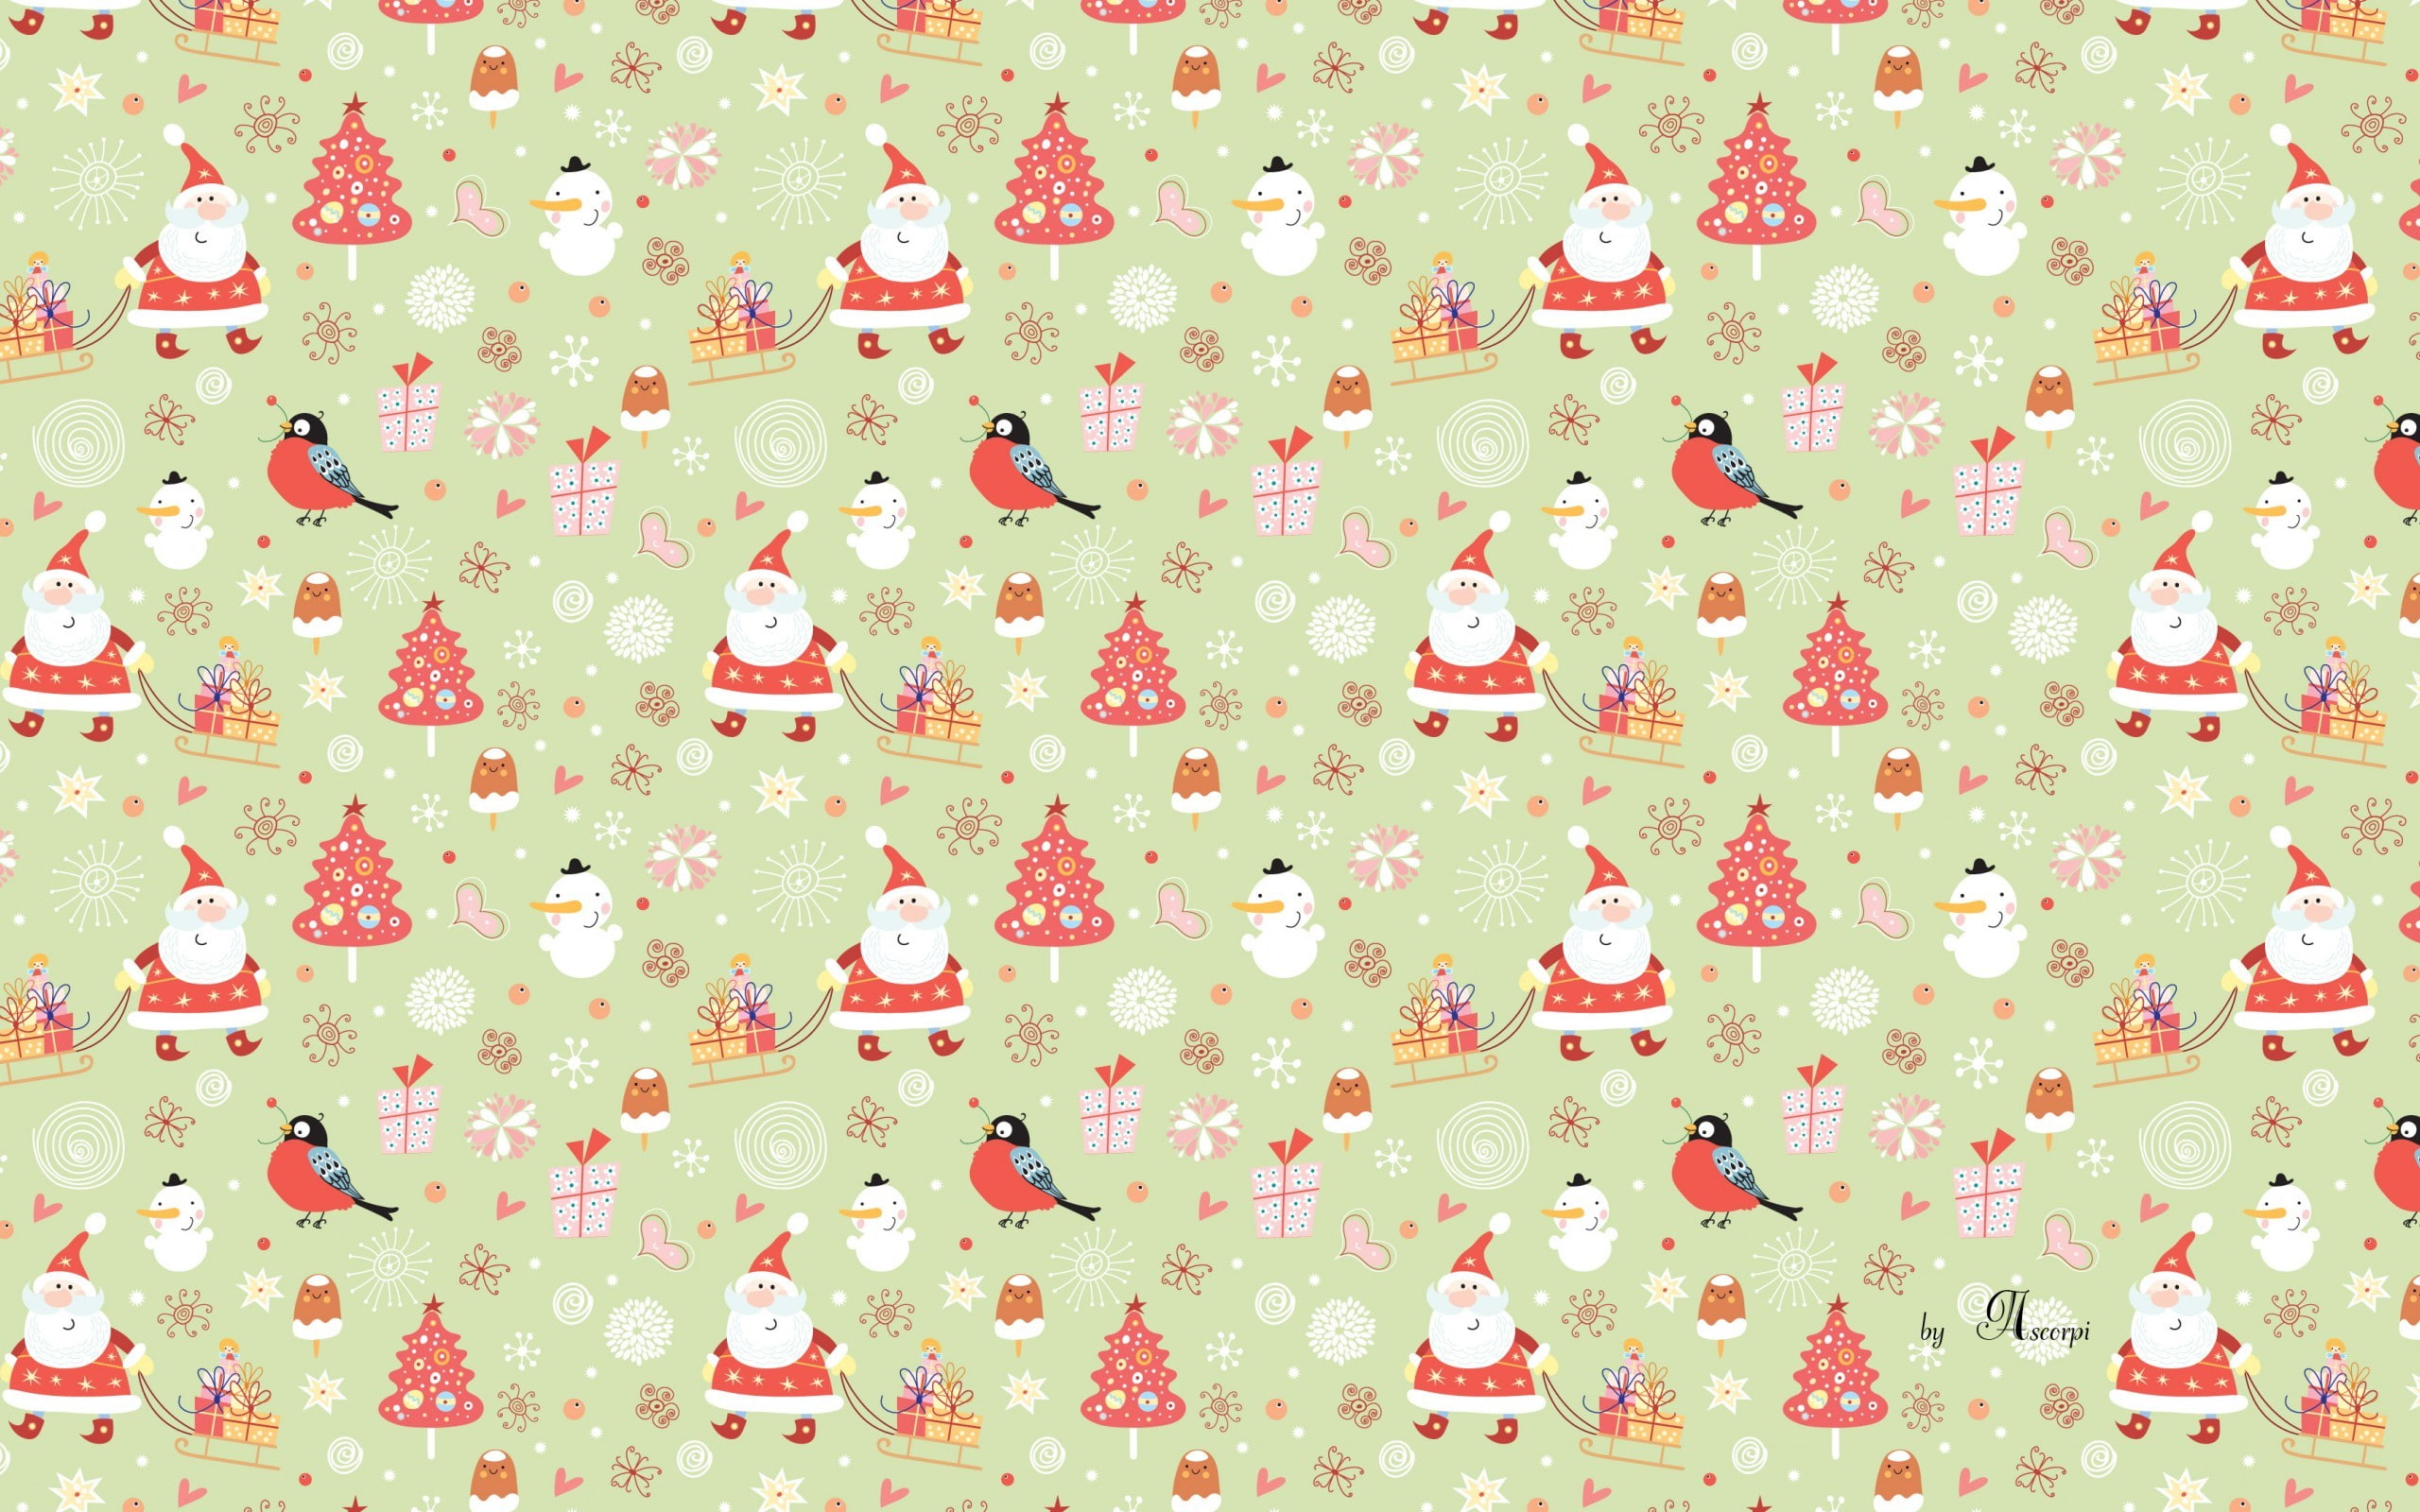 Christmas, New Year, celebration, backgrounds, pattern, full frame